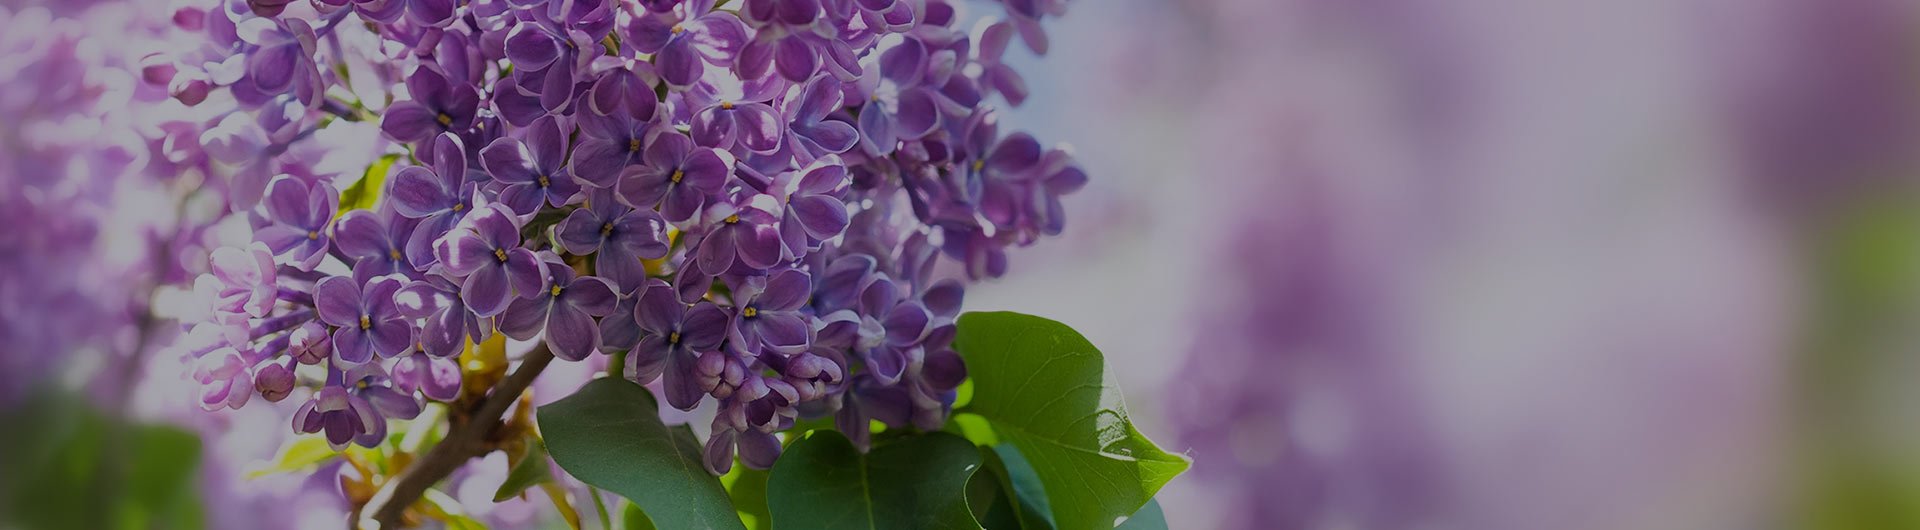 Purple syringa blossoms, Idaho's state flower.